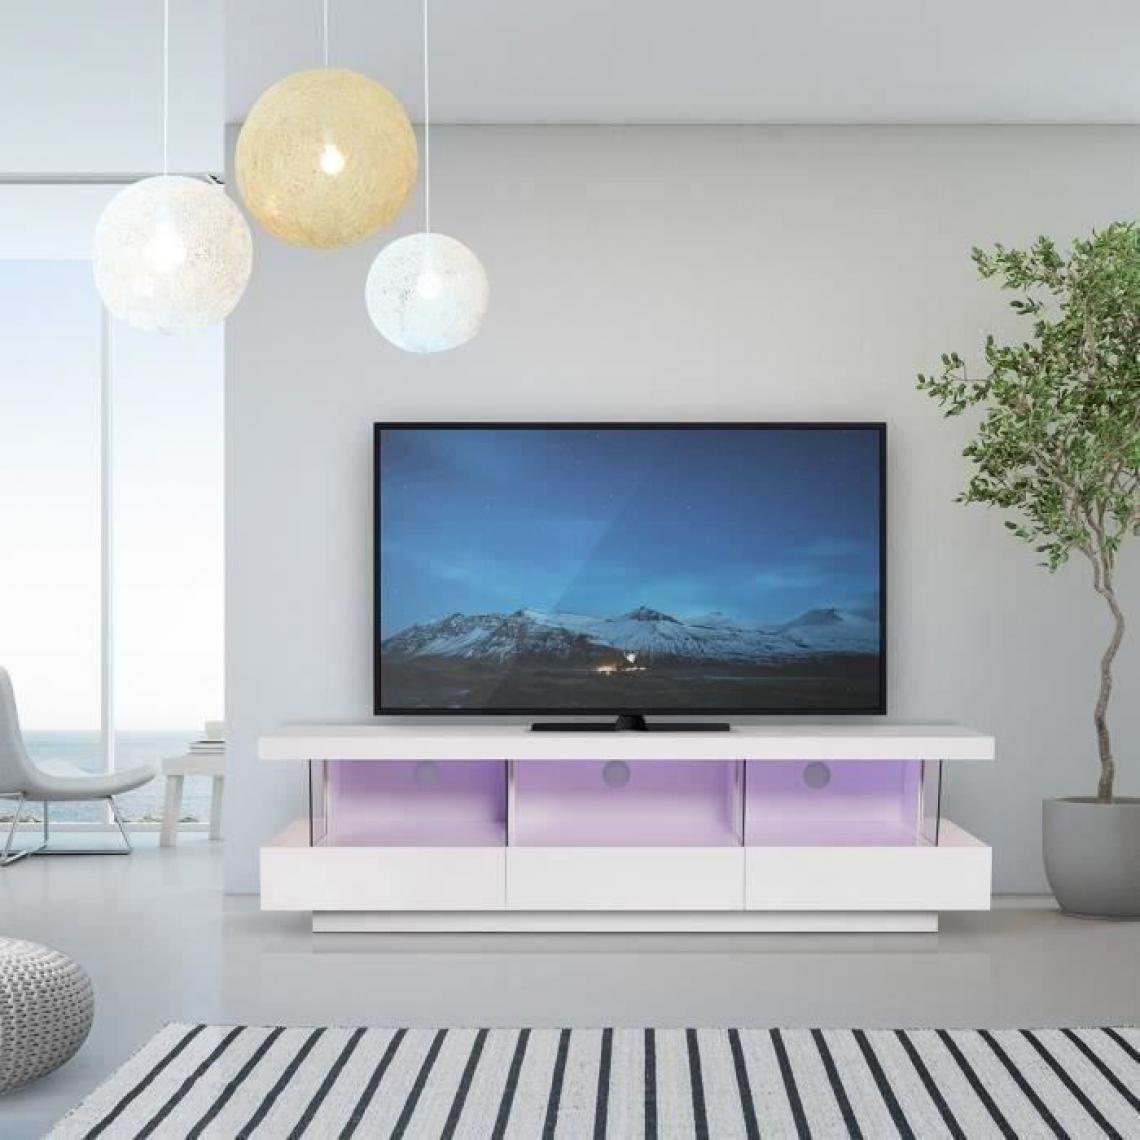 Cstore - CSTORE - meuble tv 3 tiroirs et luminaire led - blanc laqué - l 160xp 39xh 45 cm - Blue light - Meubles TV, Hi-Fi